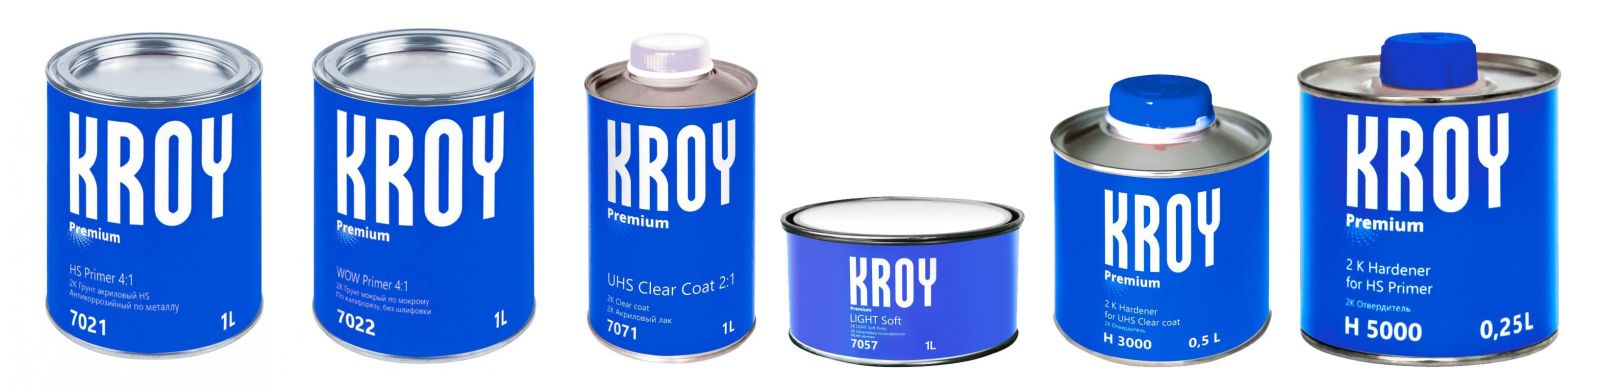 Продукция Kroy премиум